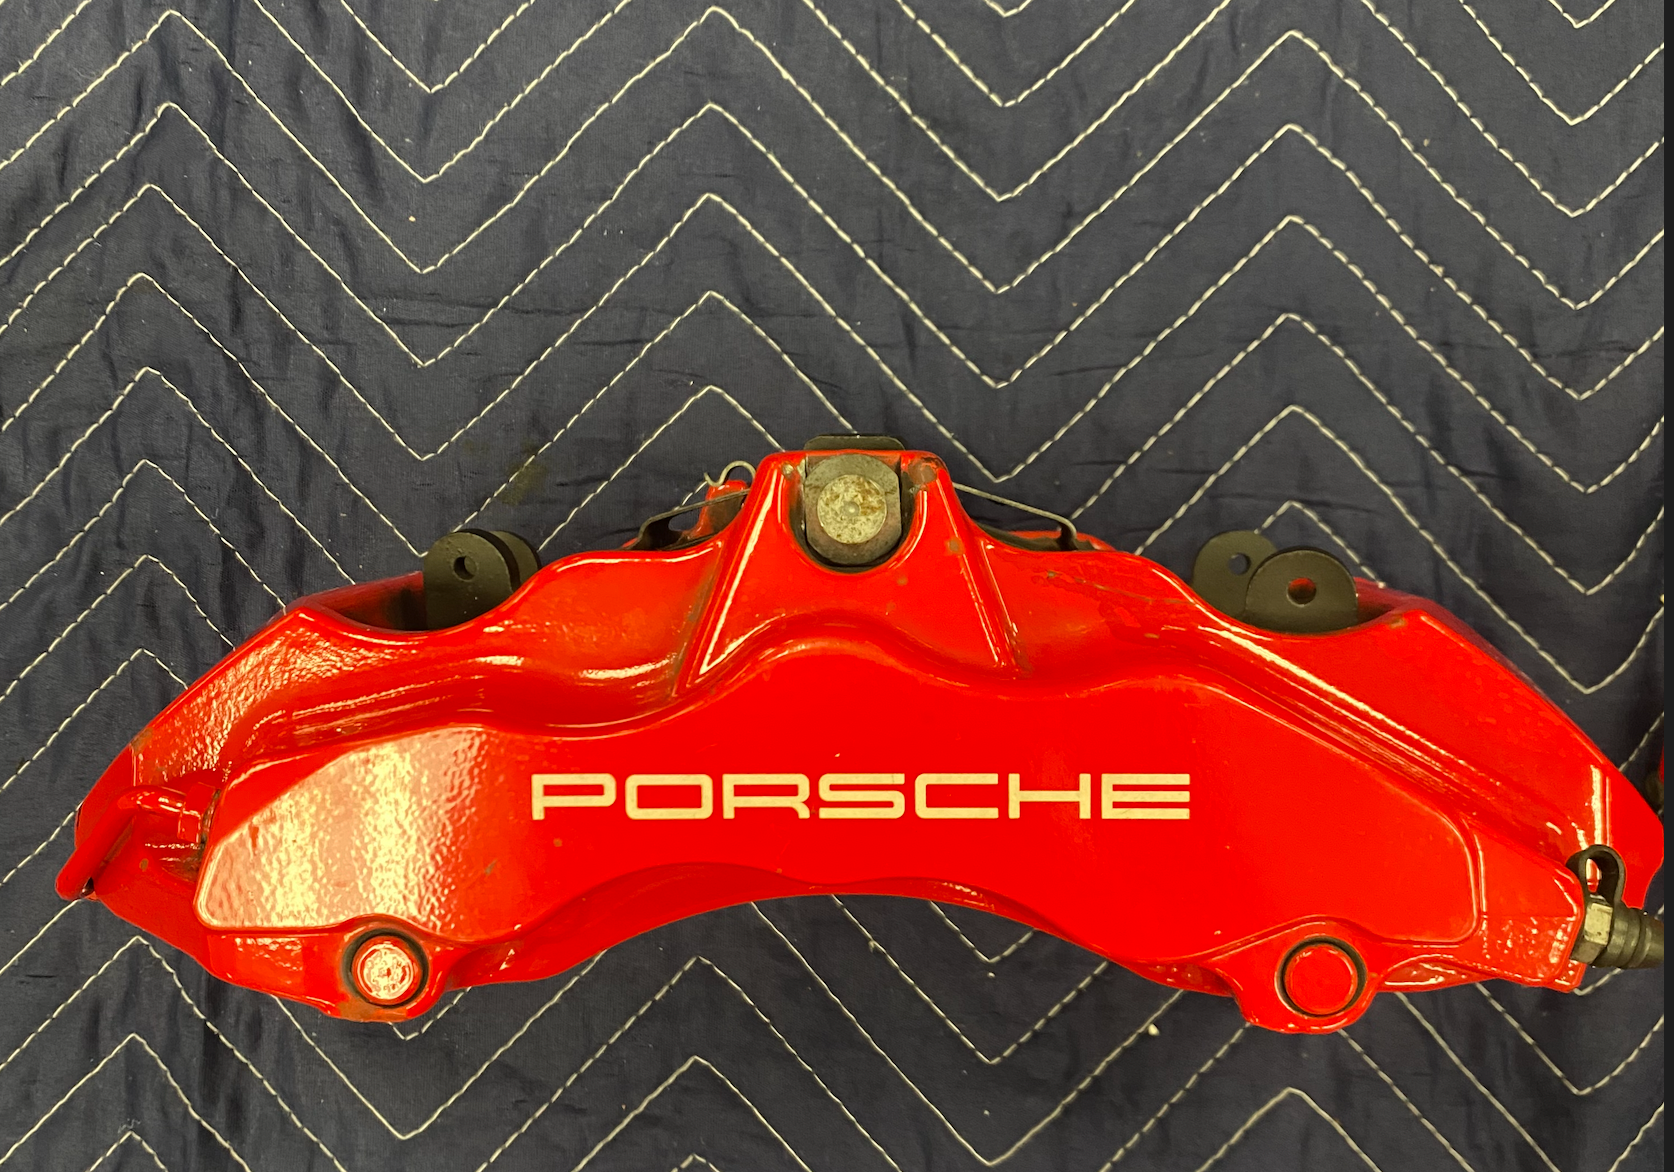 2007 Porsche GT3 - OEM GT3 Calipers - Accessories - $4,500 - Princeton, NJ 08540, United States